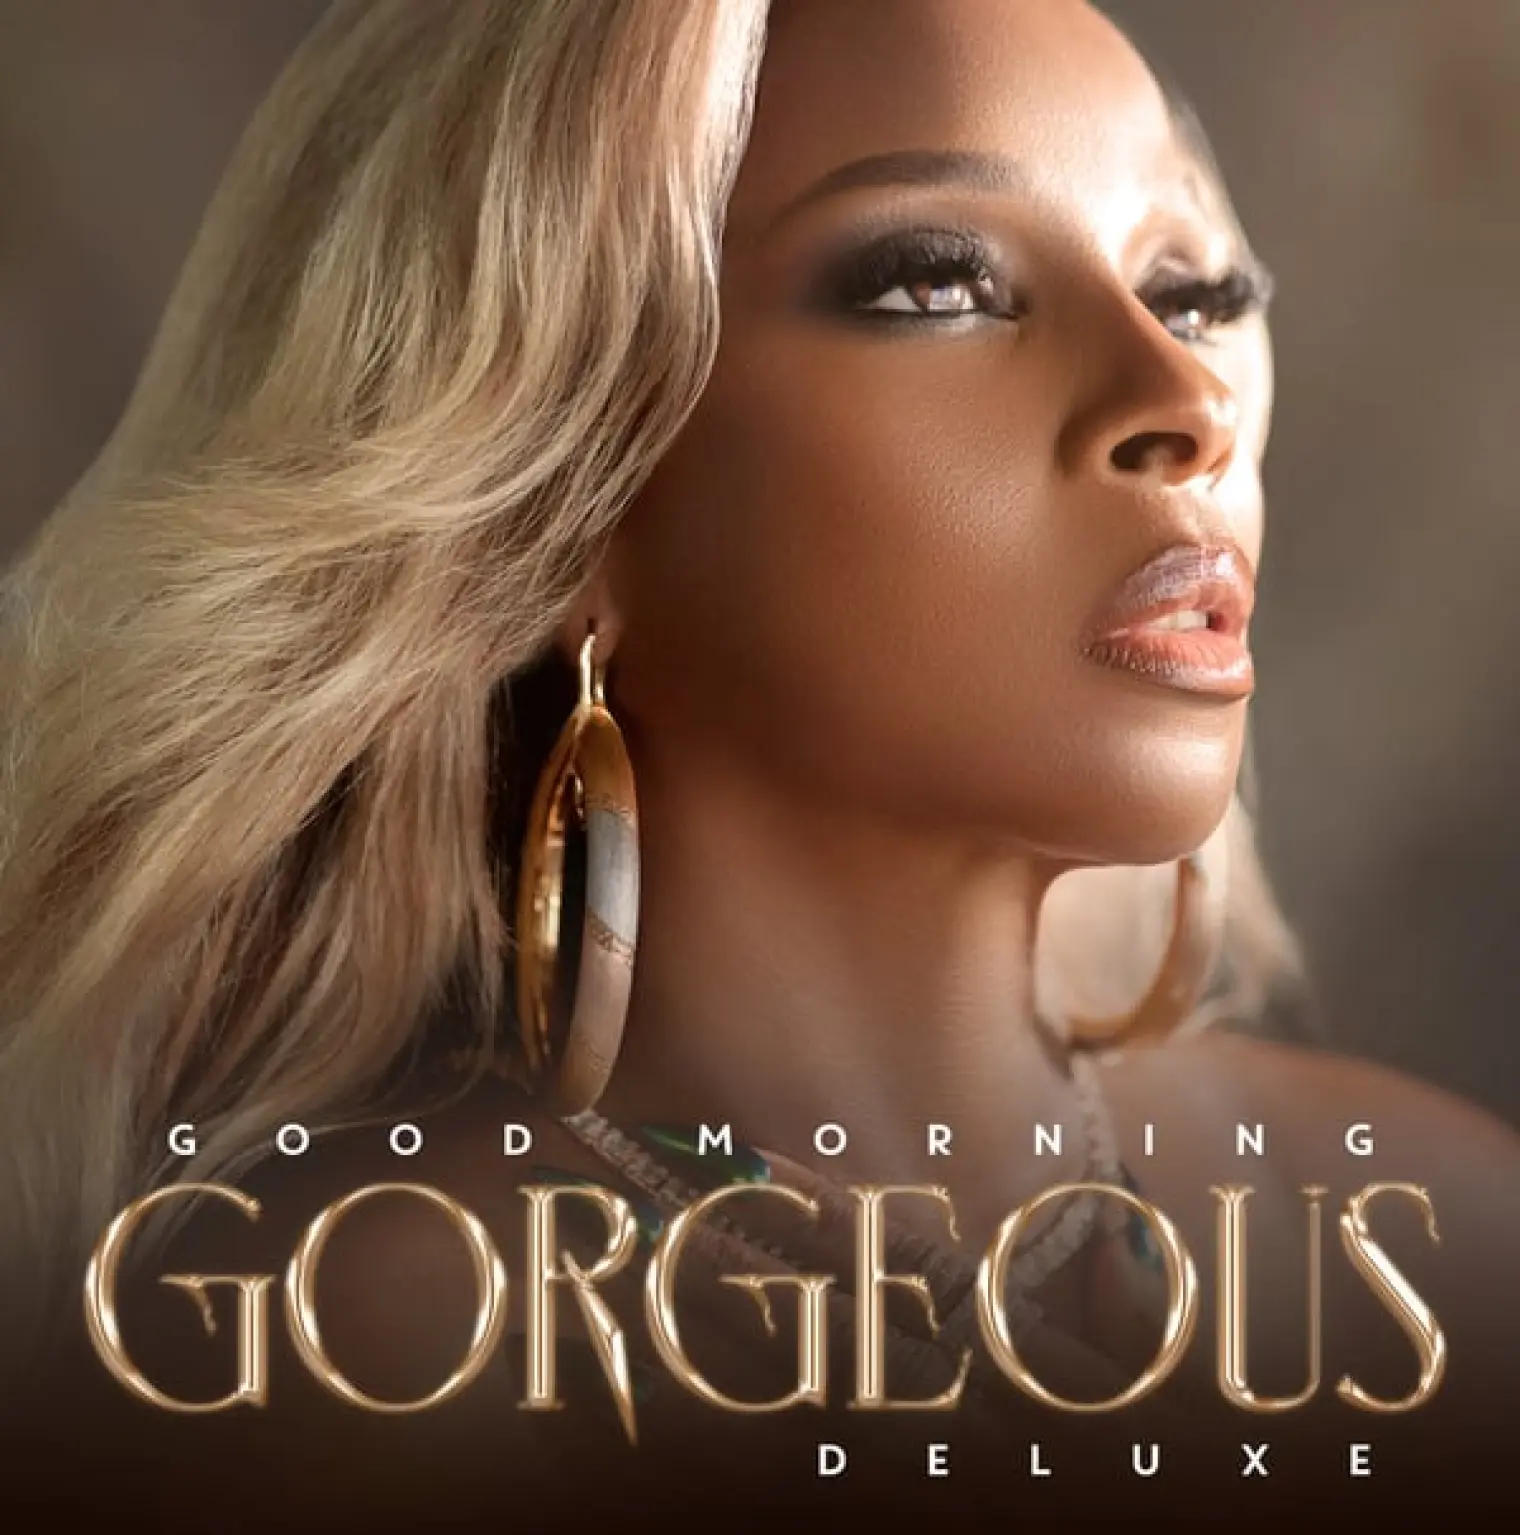 Good Morning Gorgeous (Deluxe) -  Mary J. Blige 